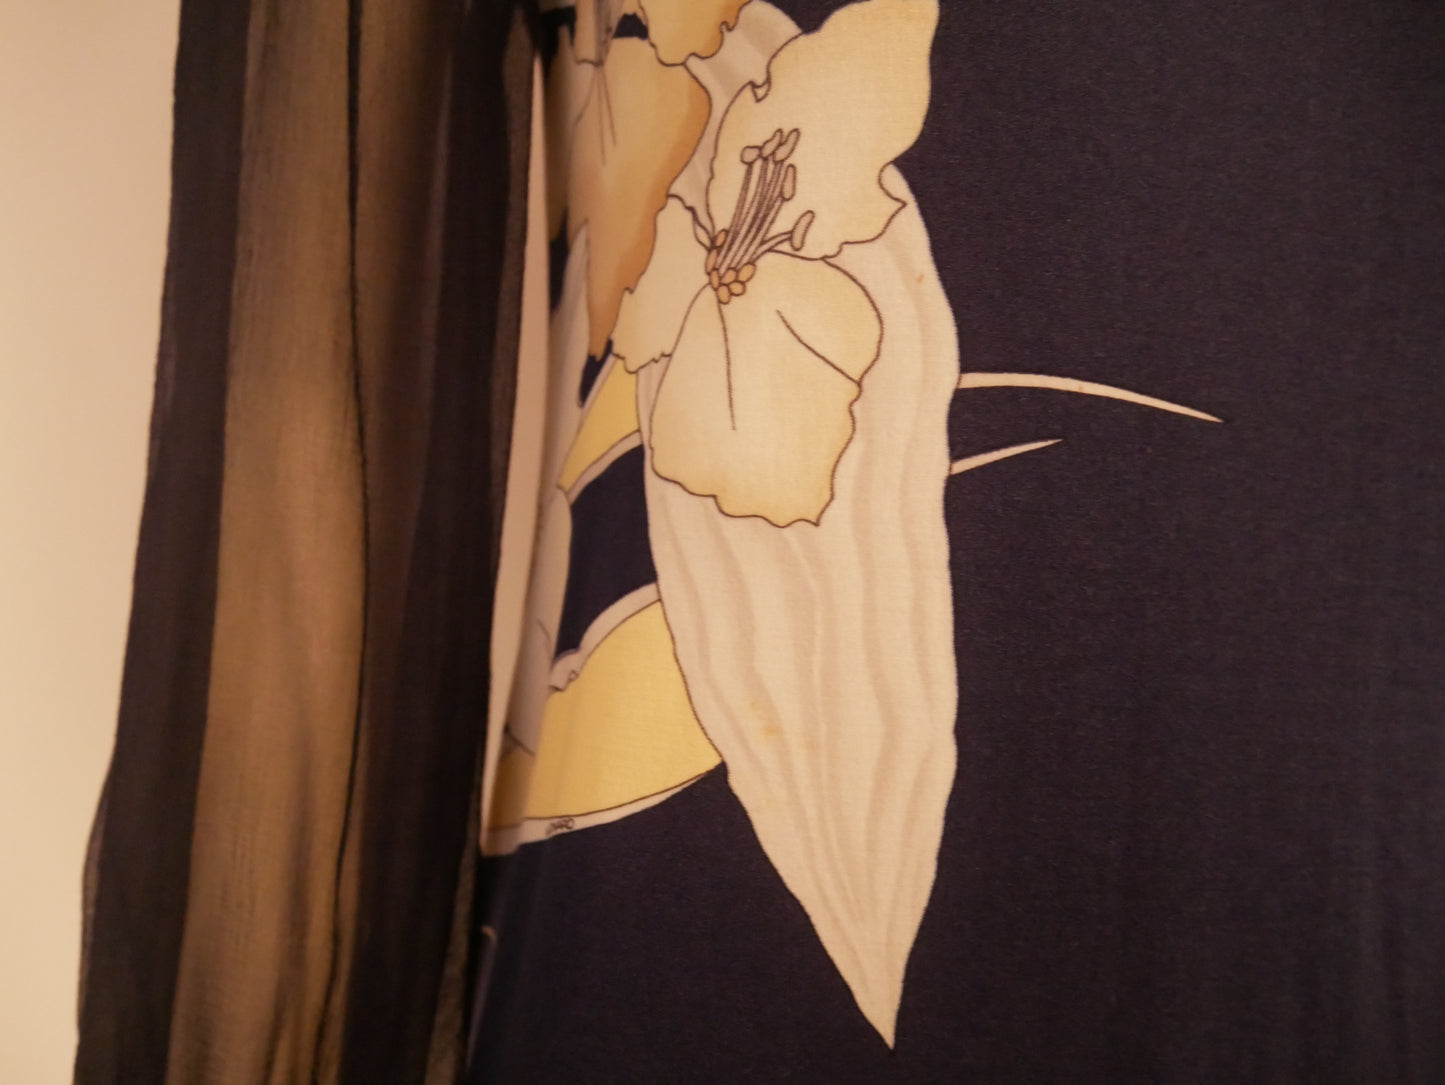 Leonard vintage cocktail dress in navy blue silk jersey with beige flowers - M - 1970s